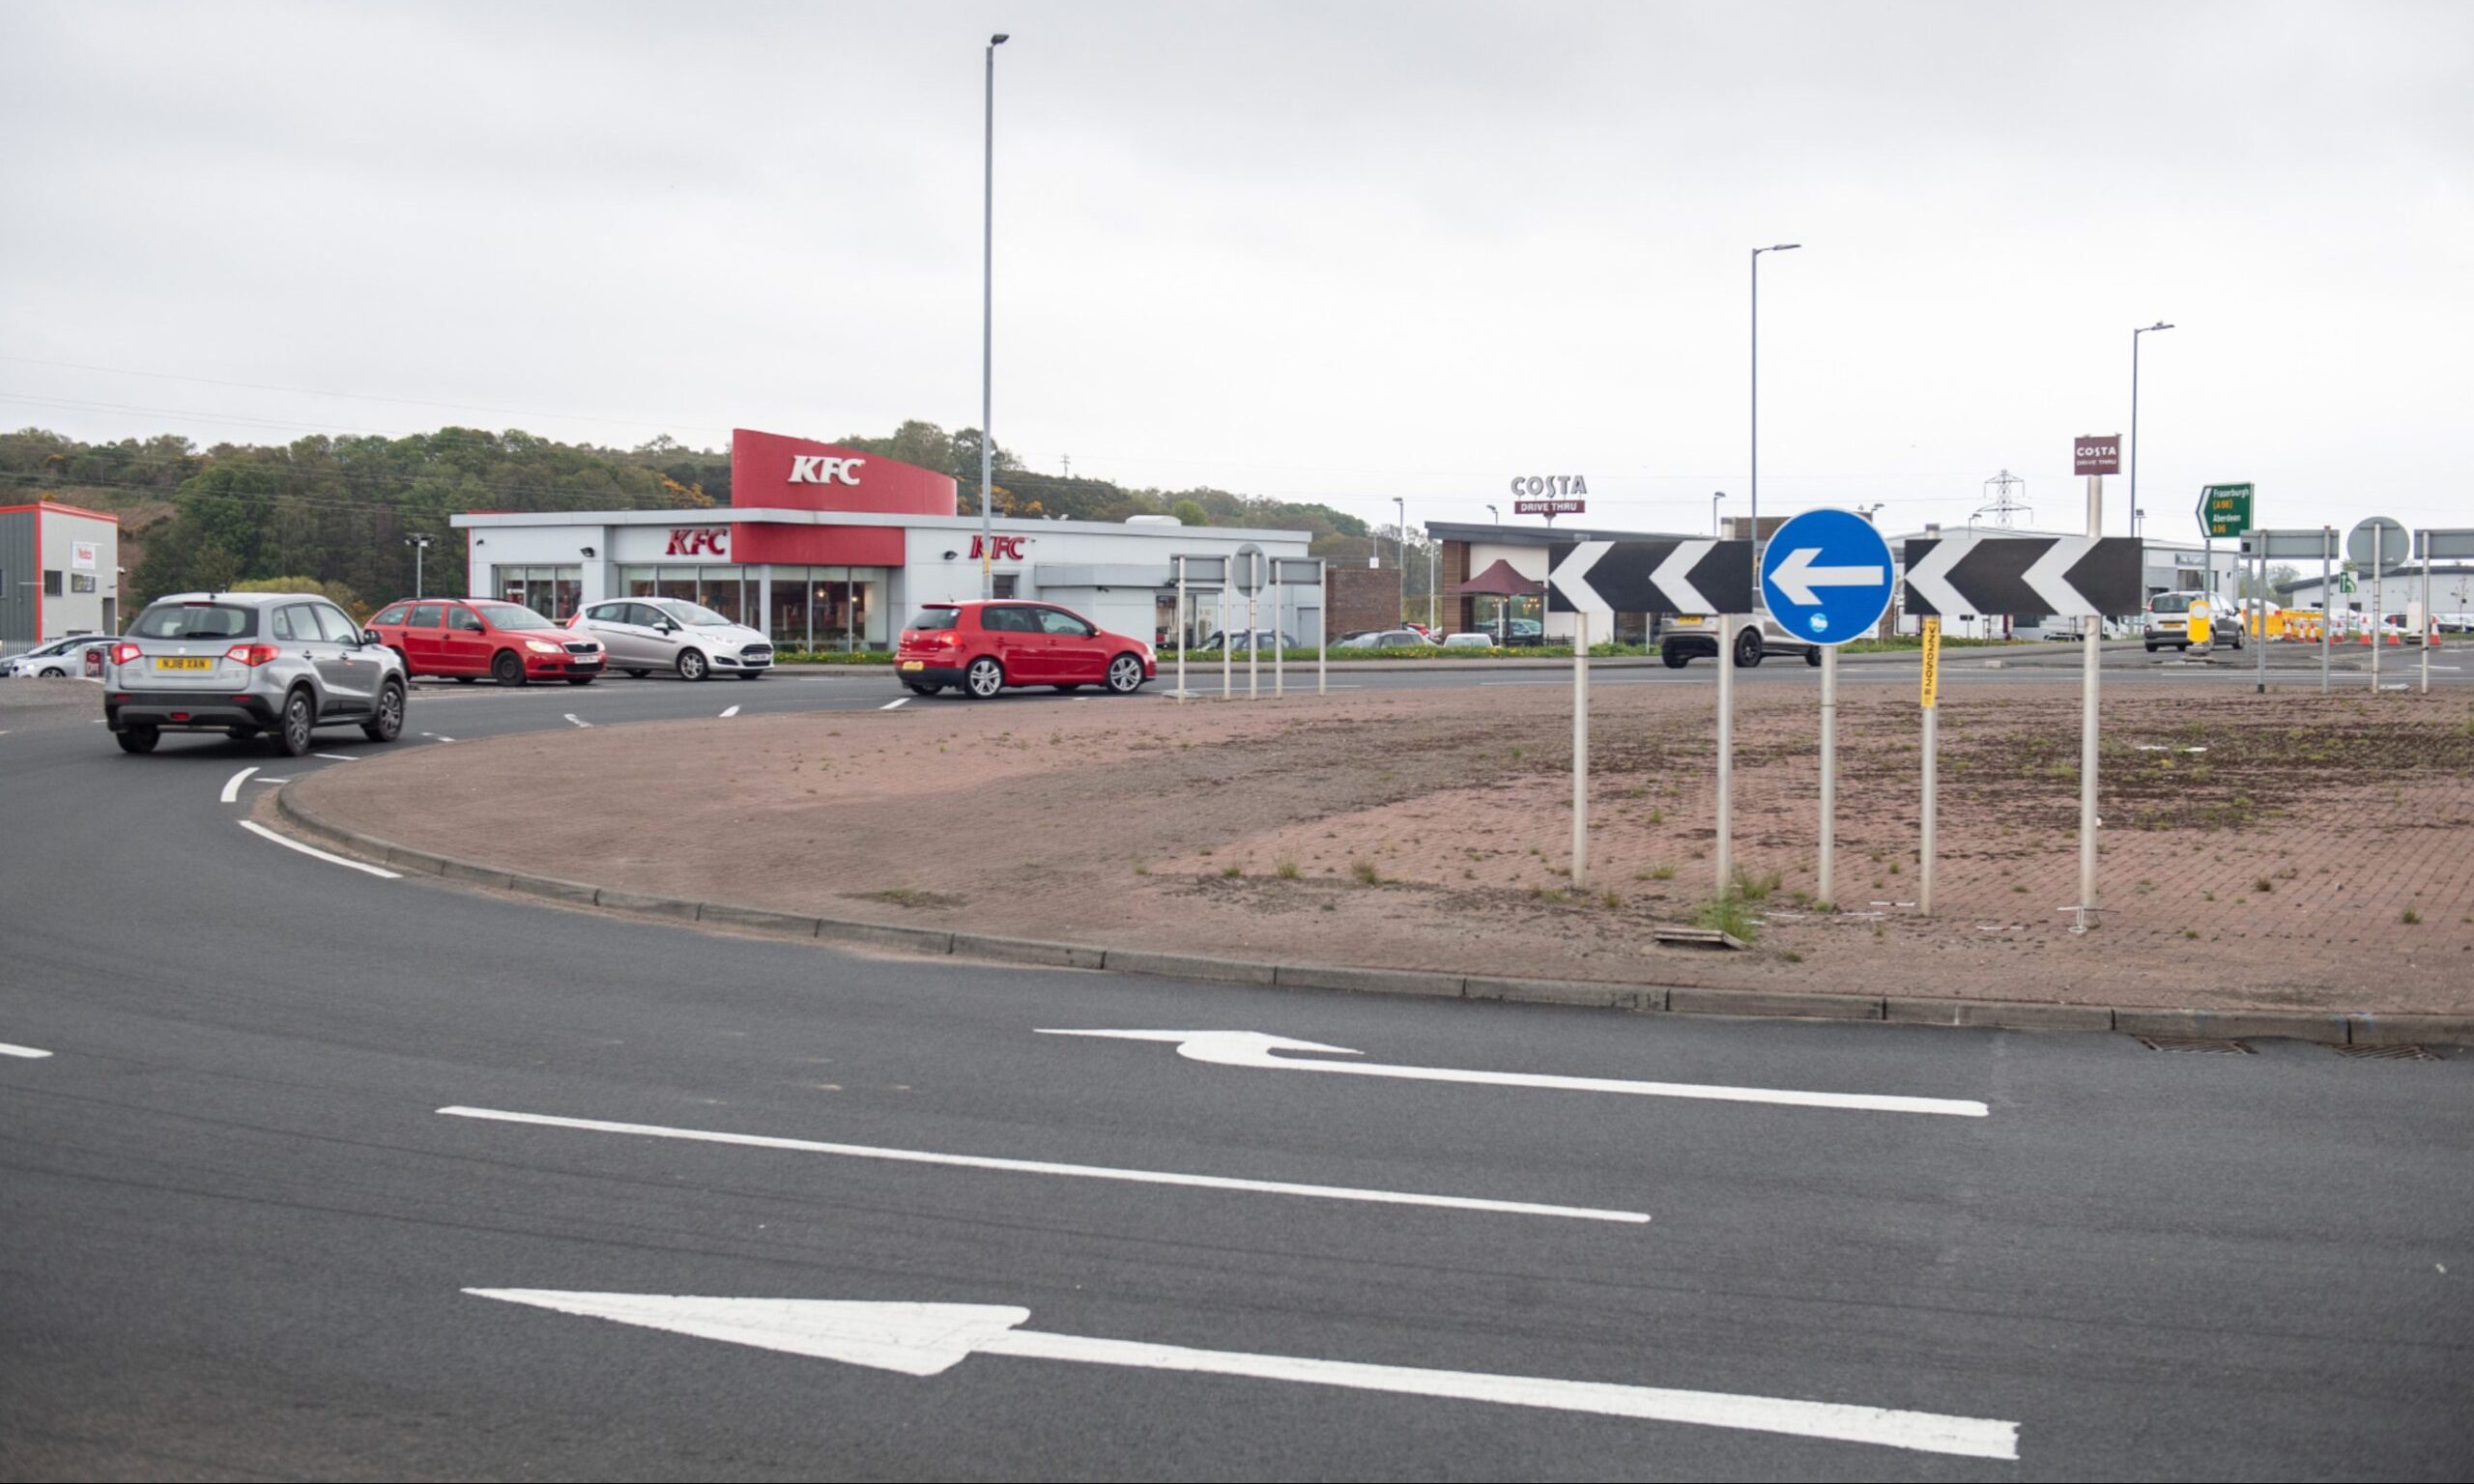 KFC roundabout in Elgin